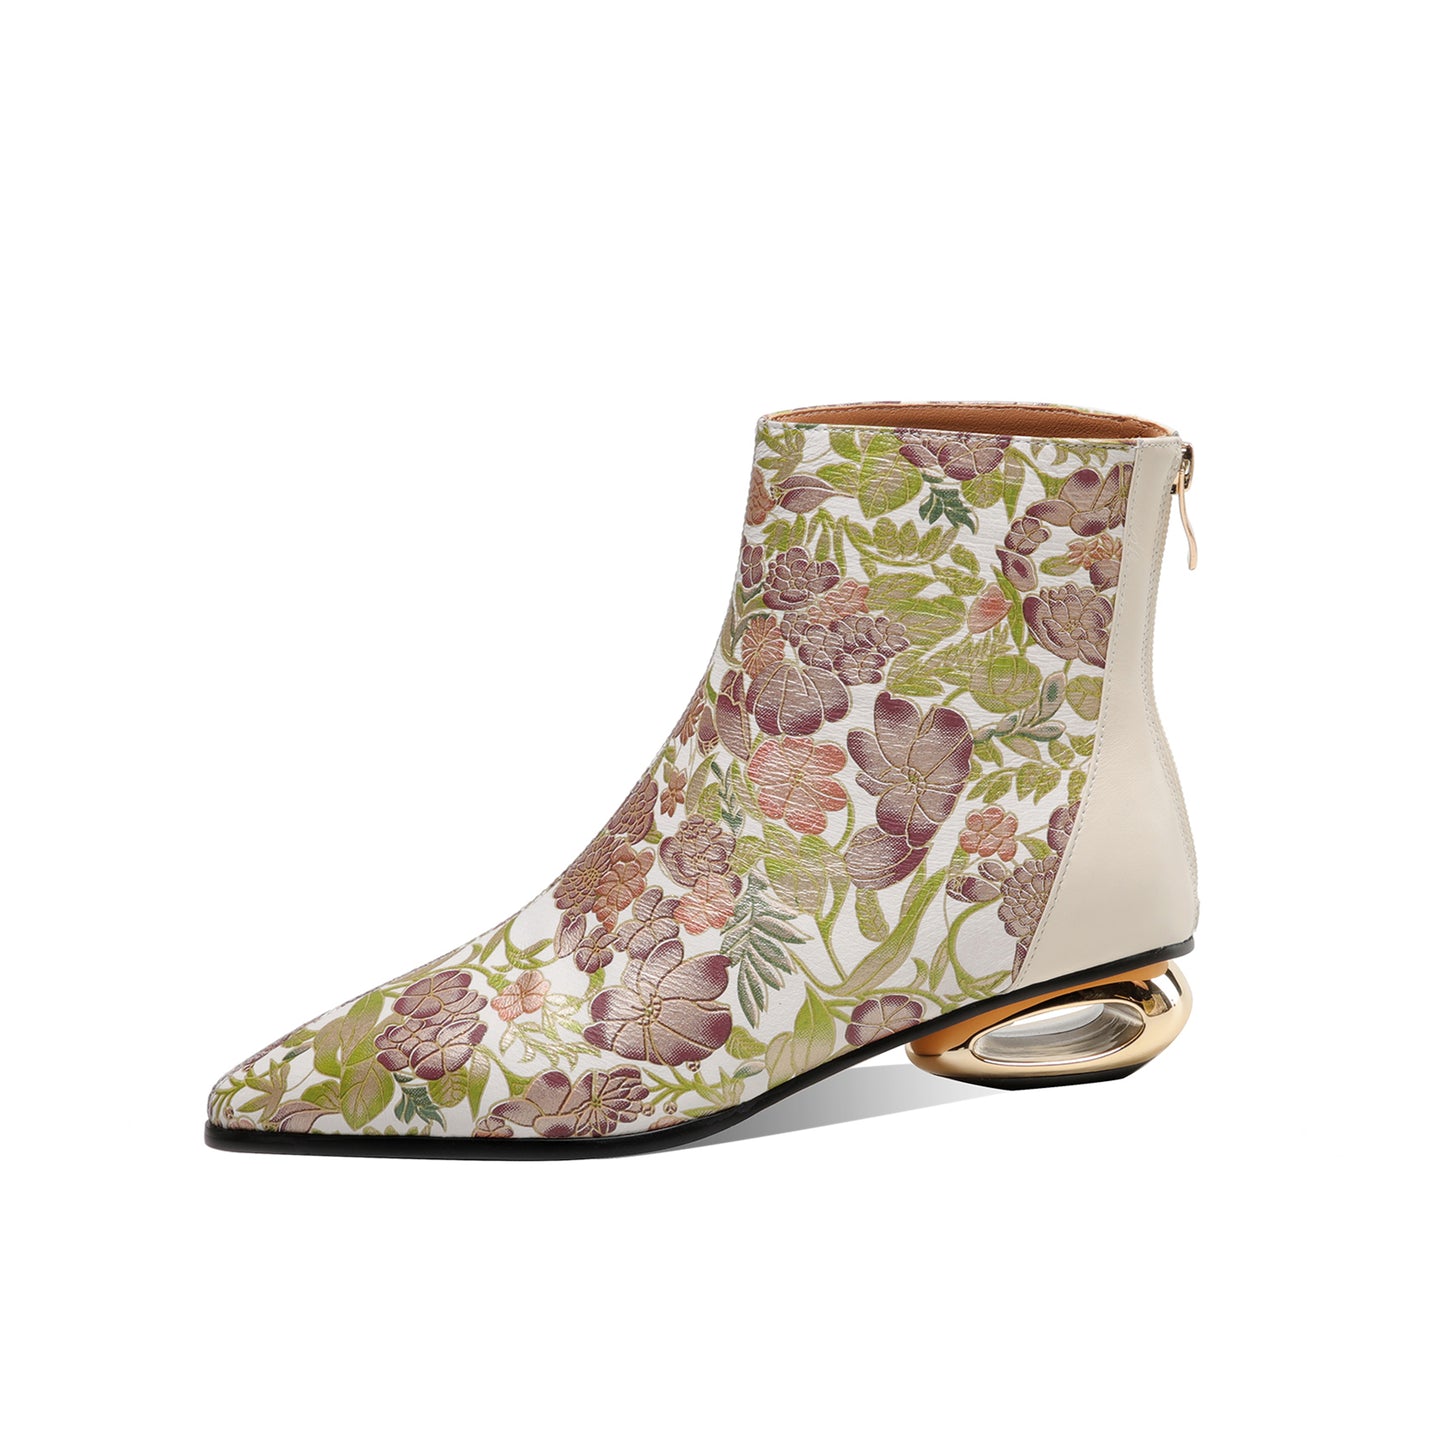 TinaCus Women's Handmade Genuine Leather Flowers Comfortable Heel Zip Up Ankle Boots